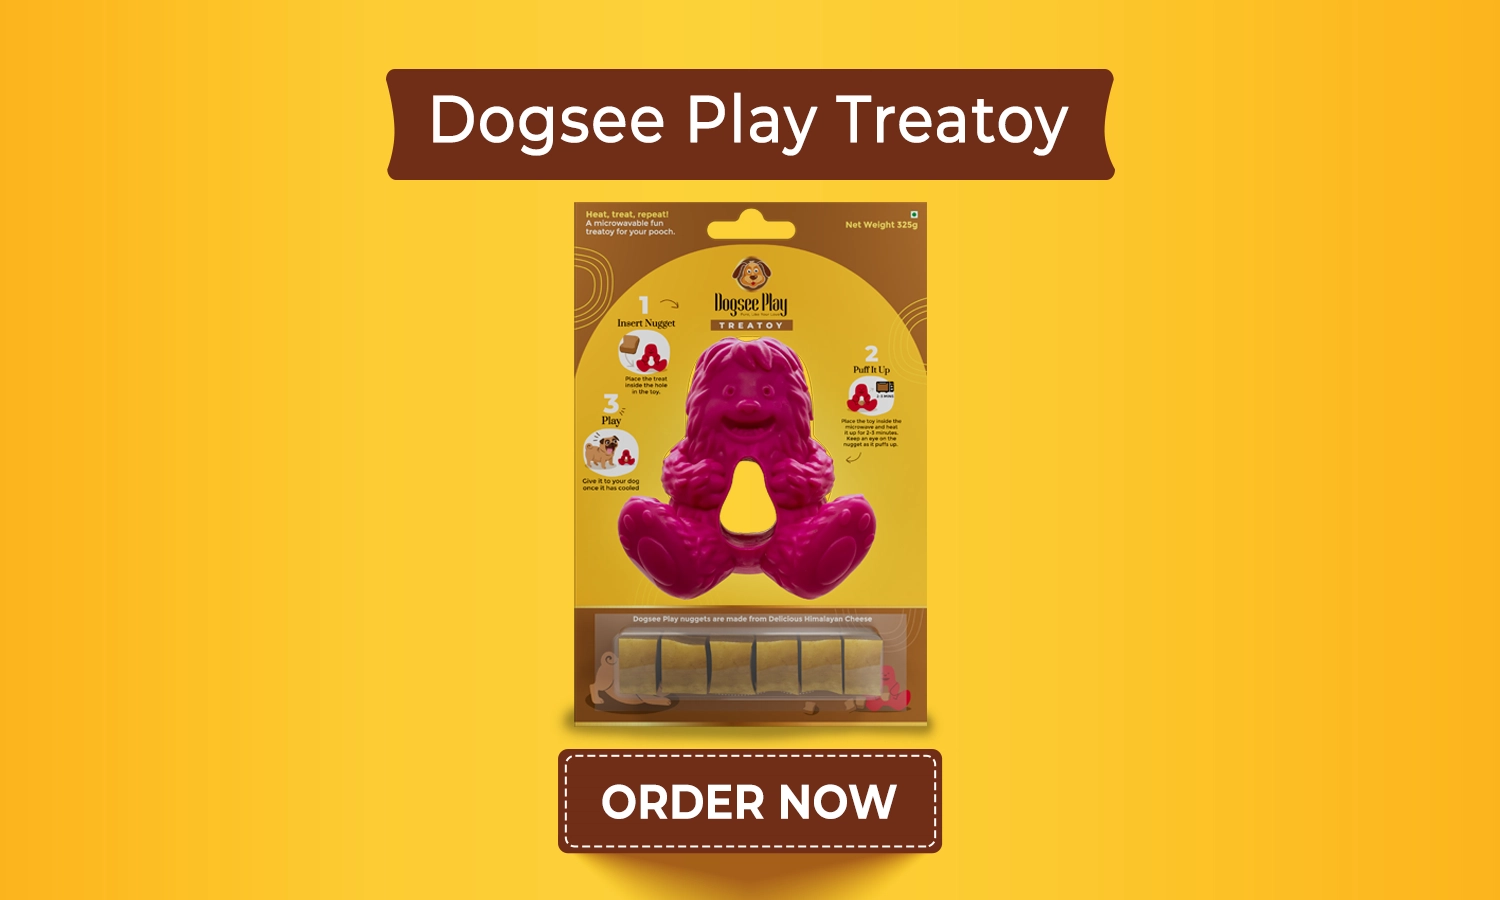 Dogsee Play Treatoy